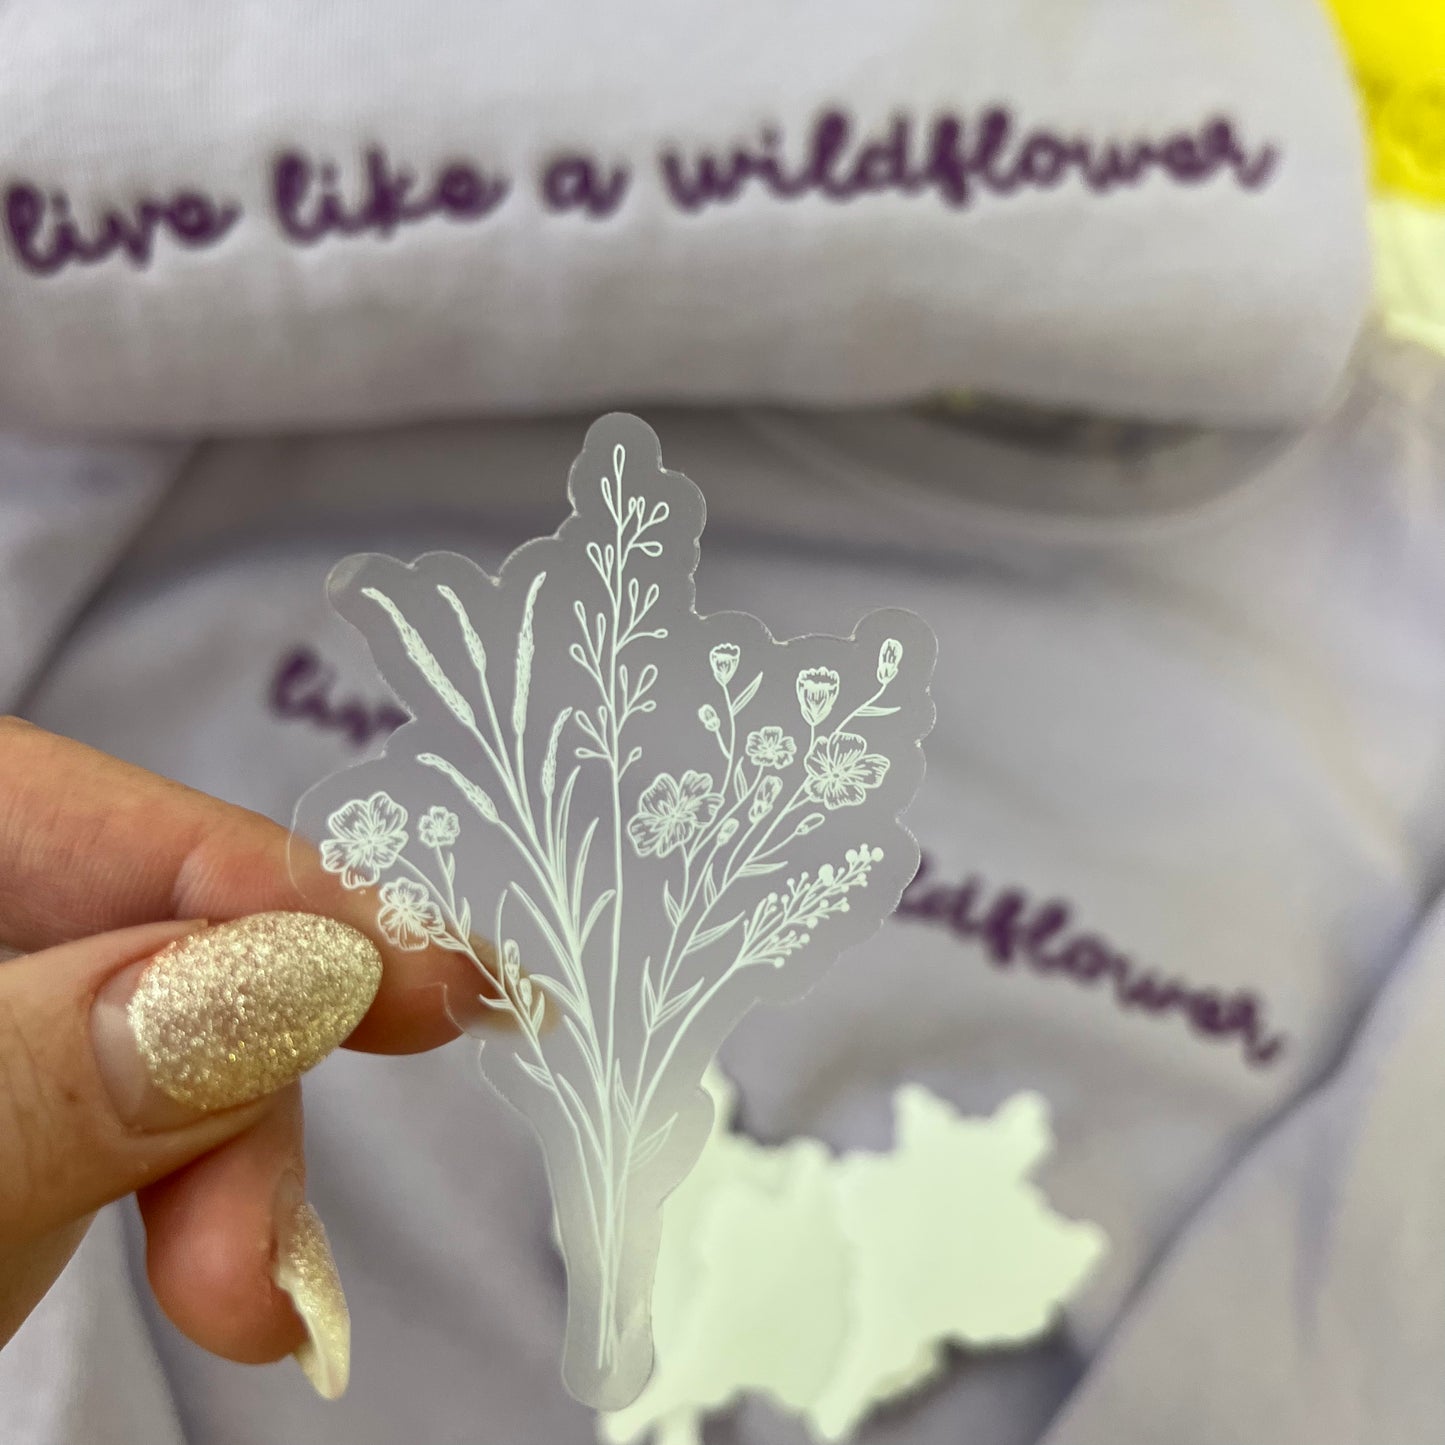 CLEAR White Wildflower Waterproof Vinyl Sticker